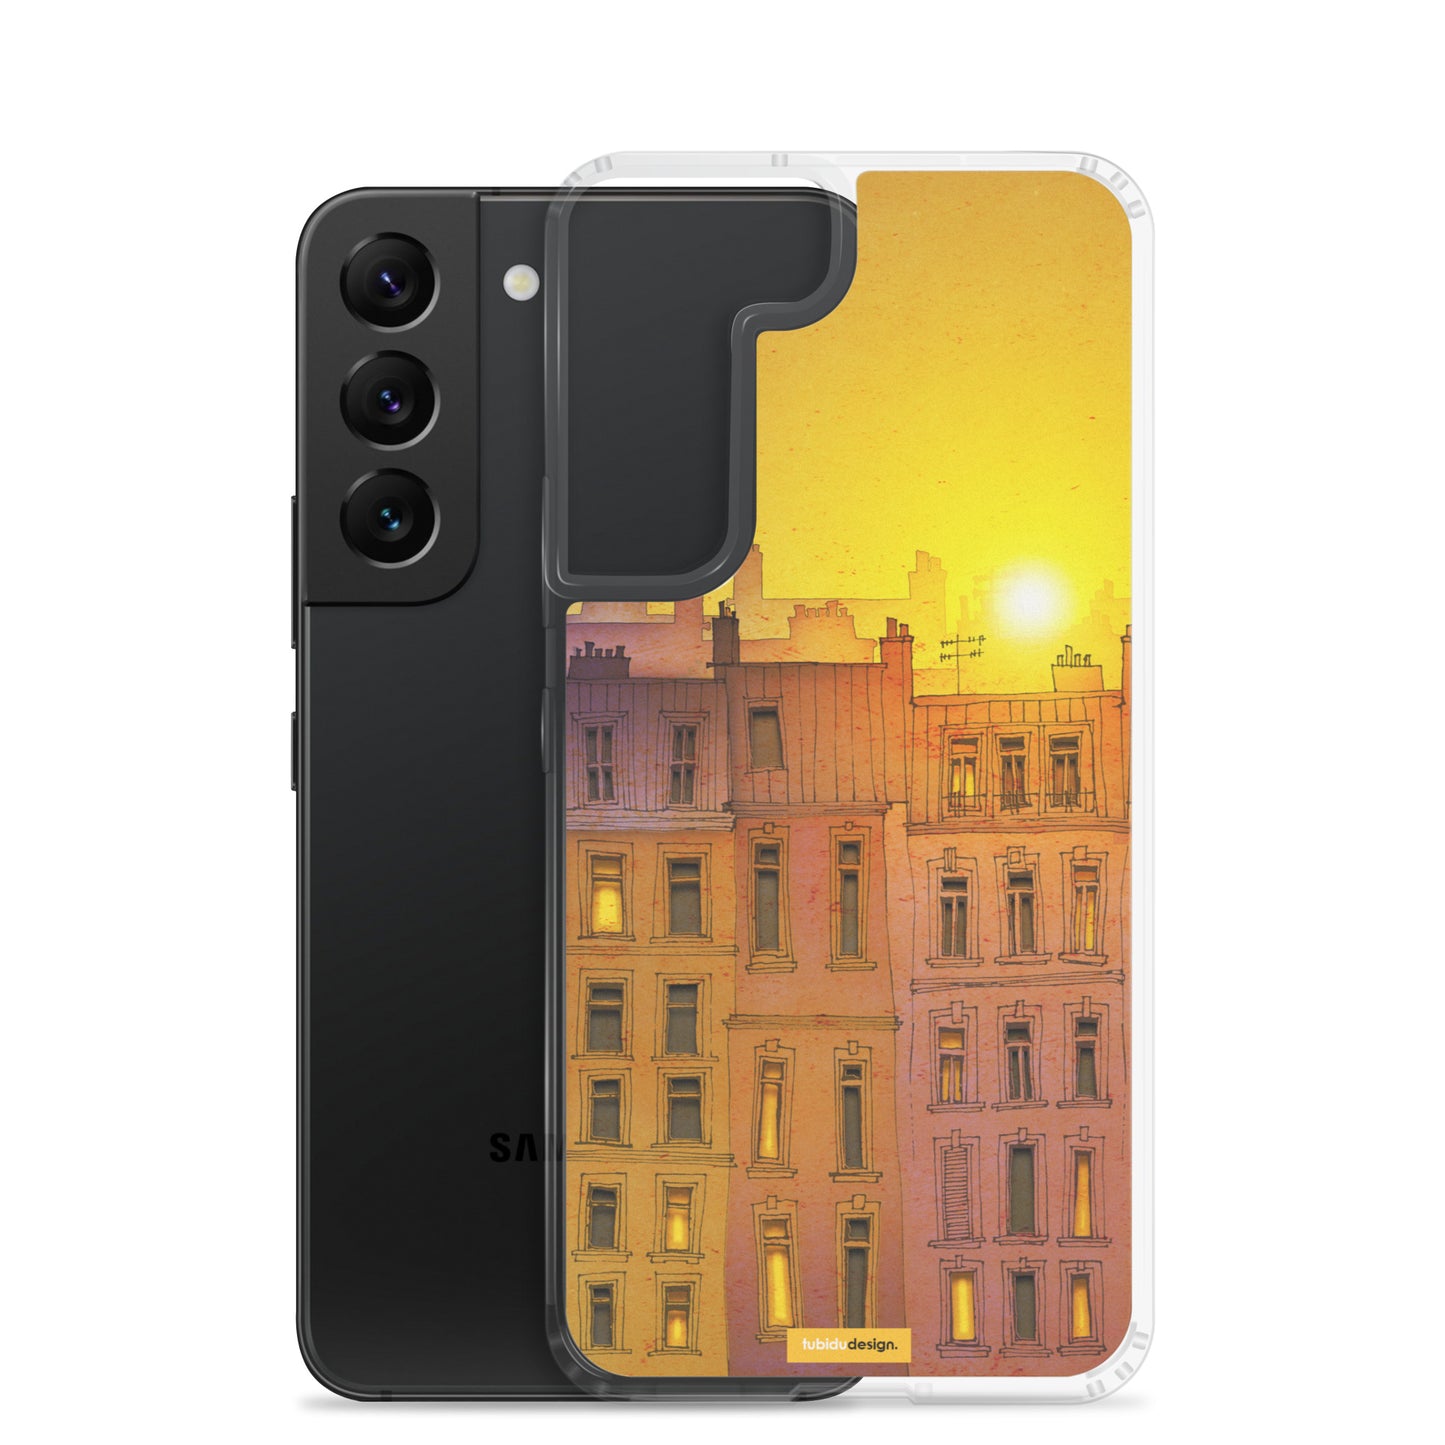 Sunrise - Illustrated Samsung Phone Case